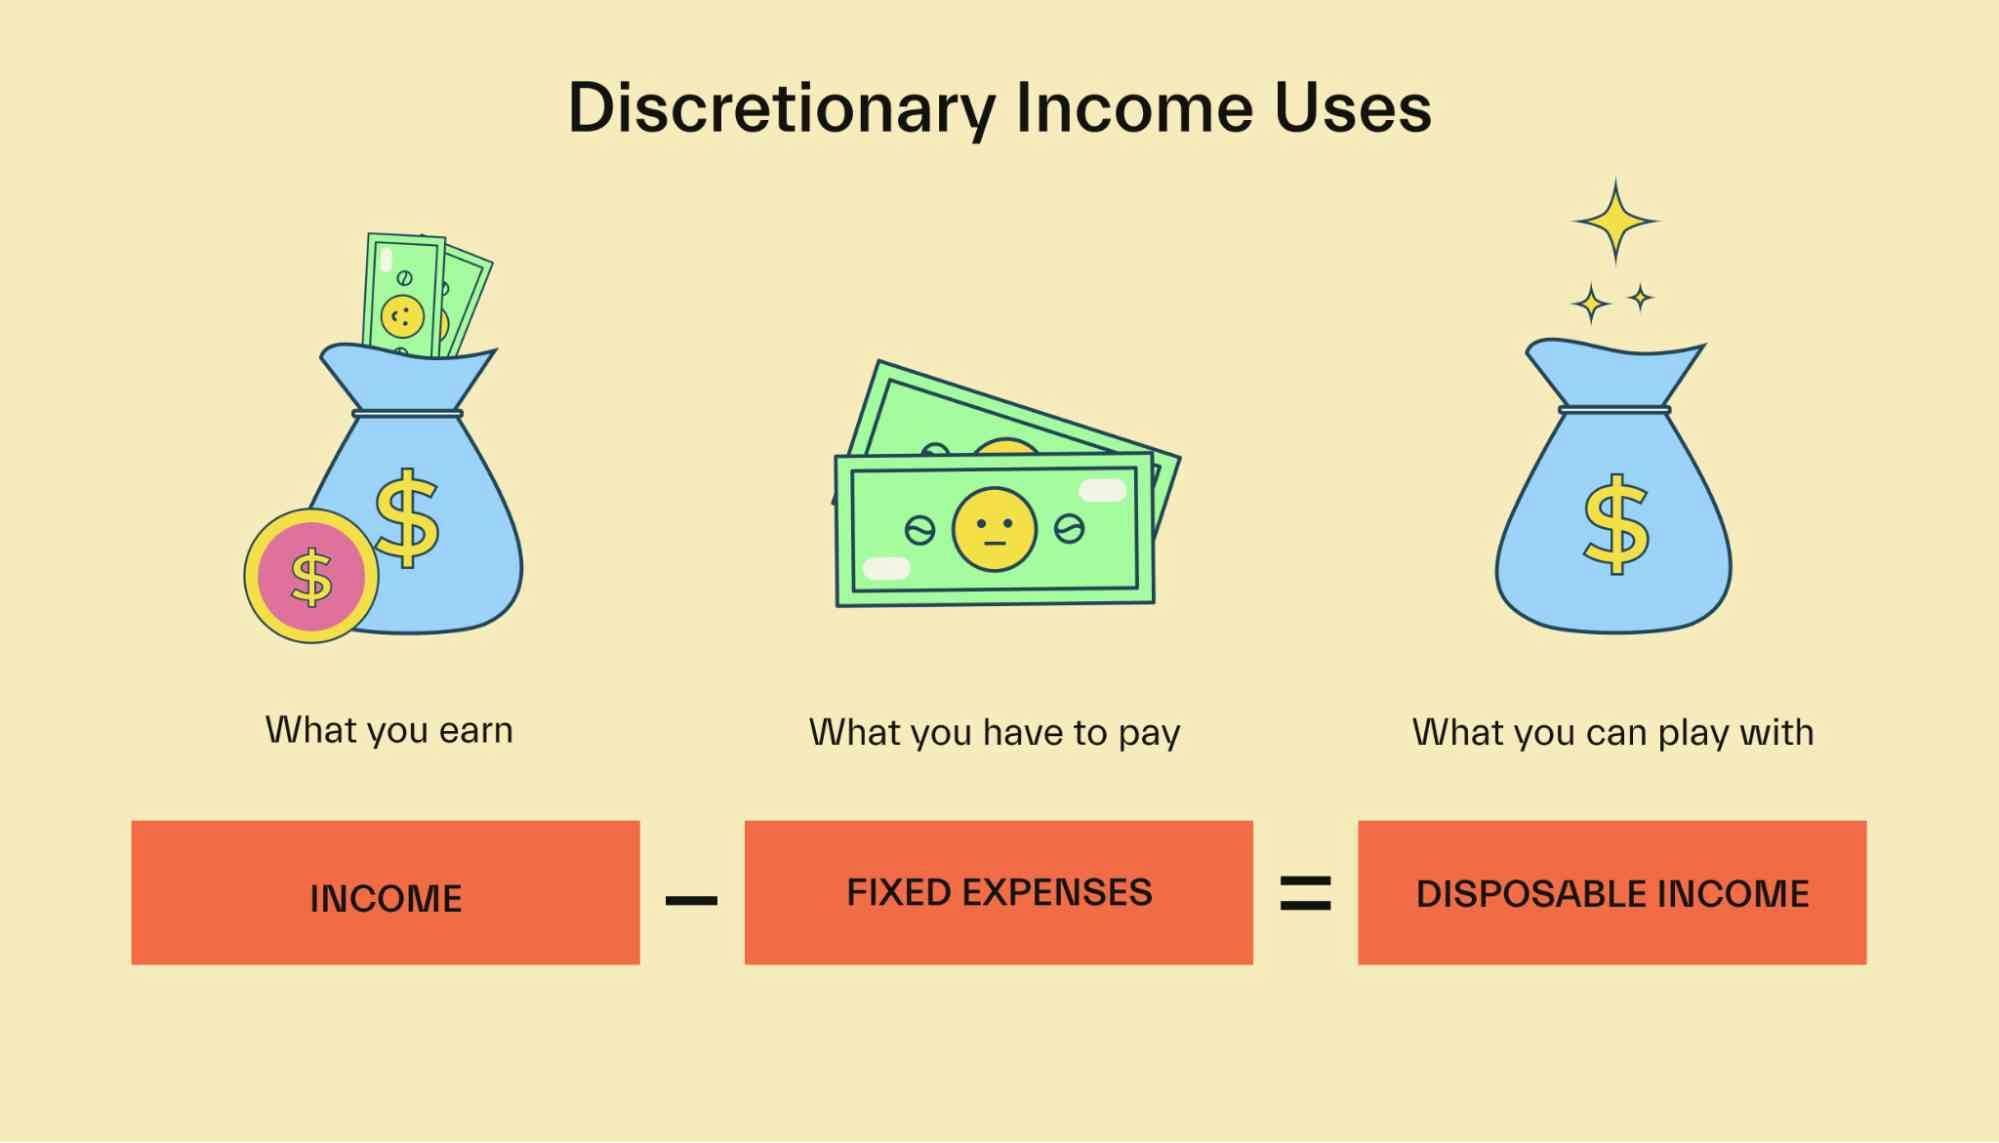 Discretionary income uses